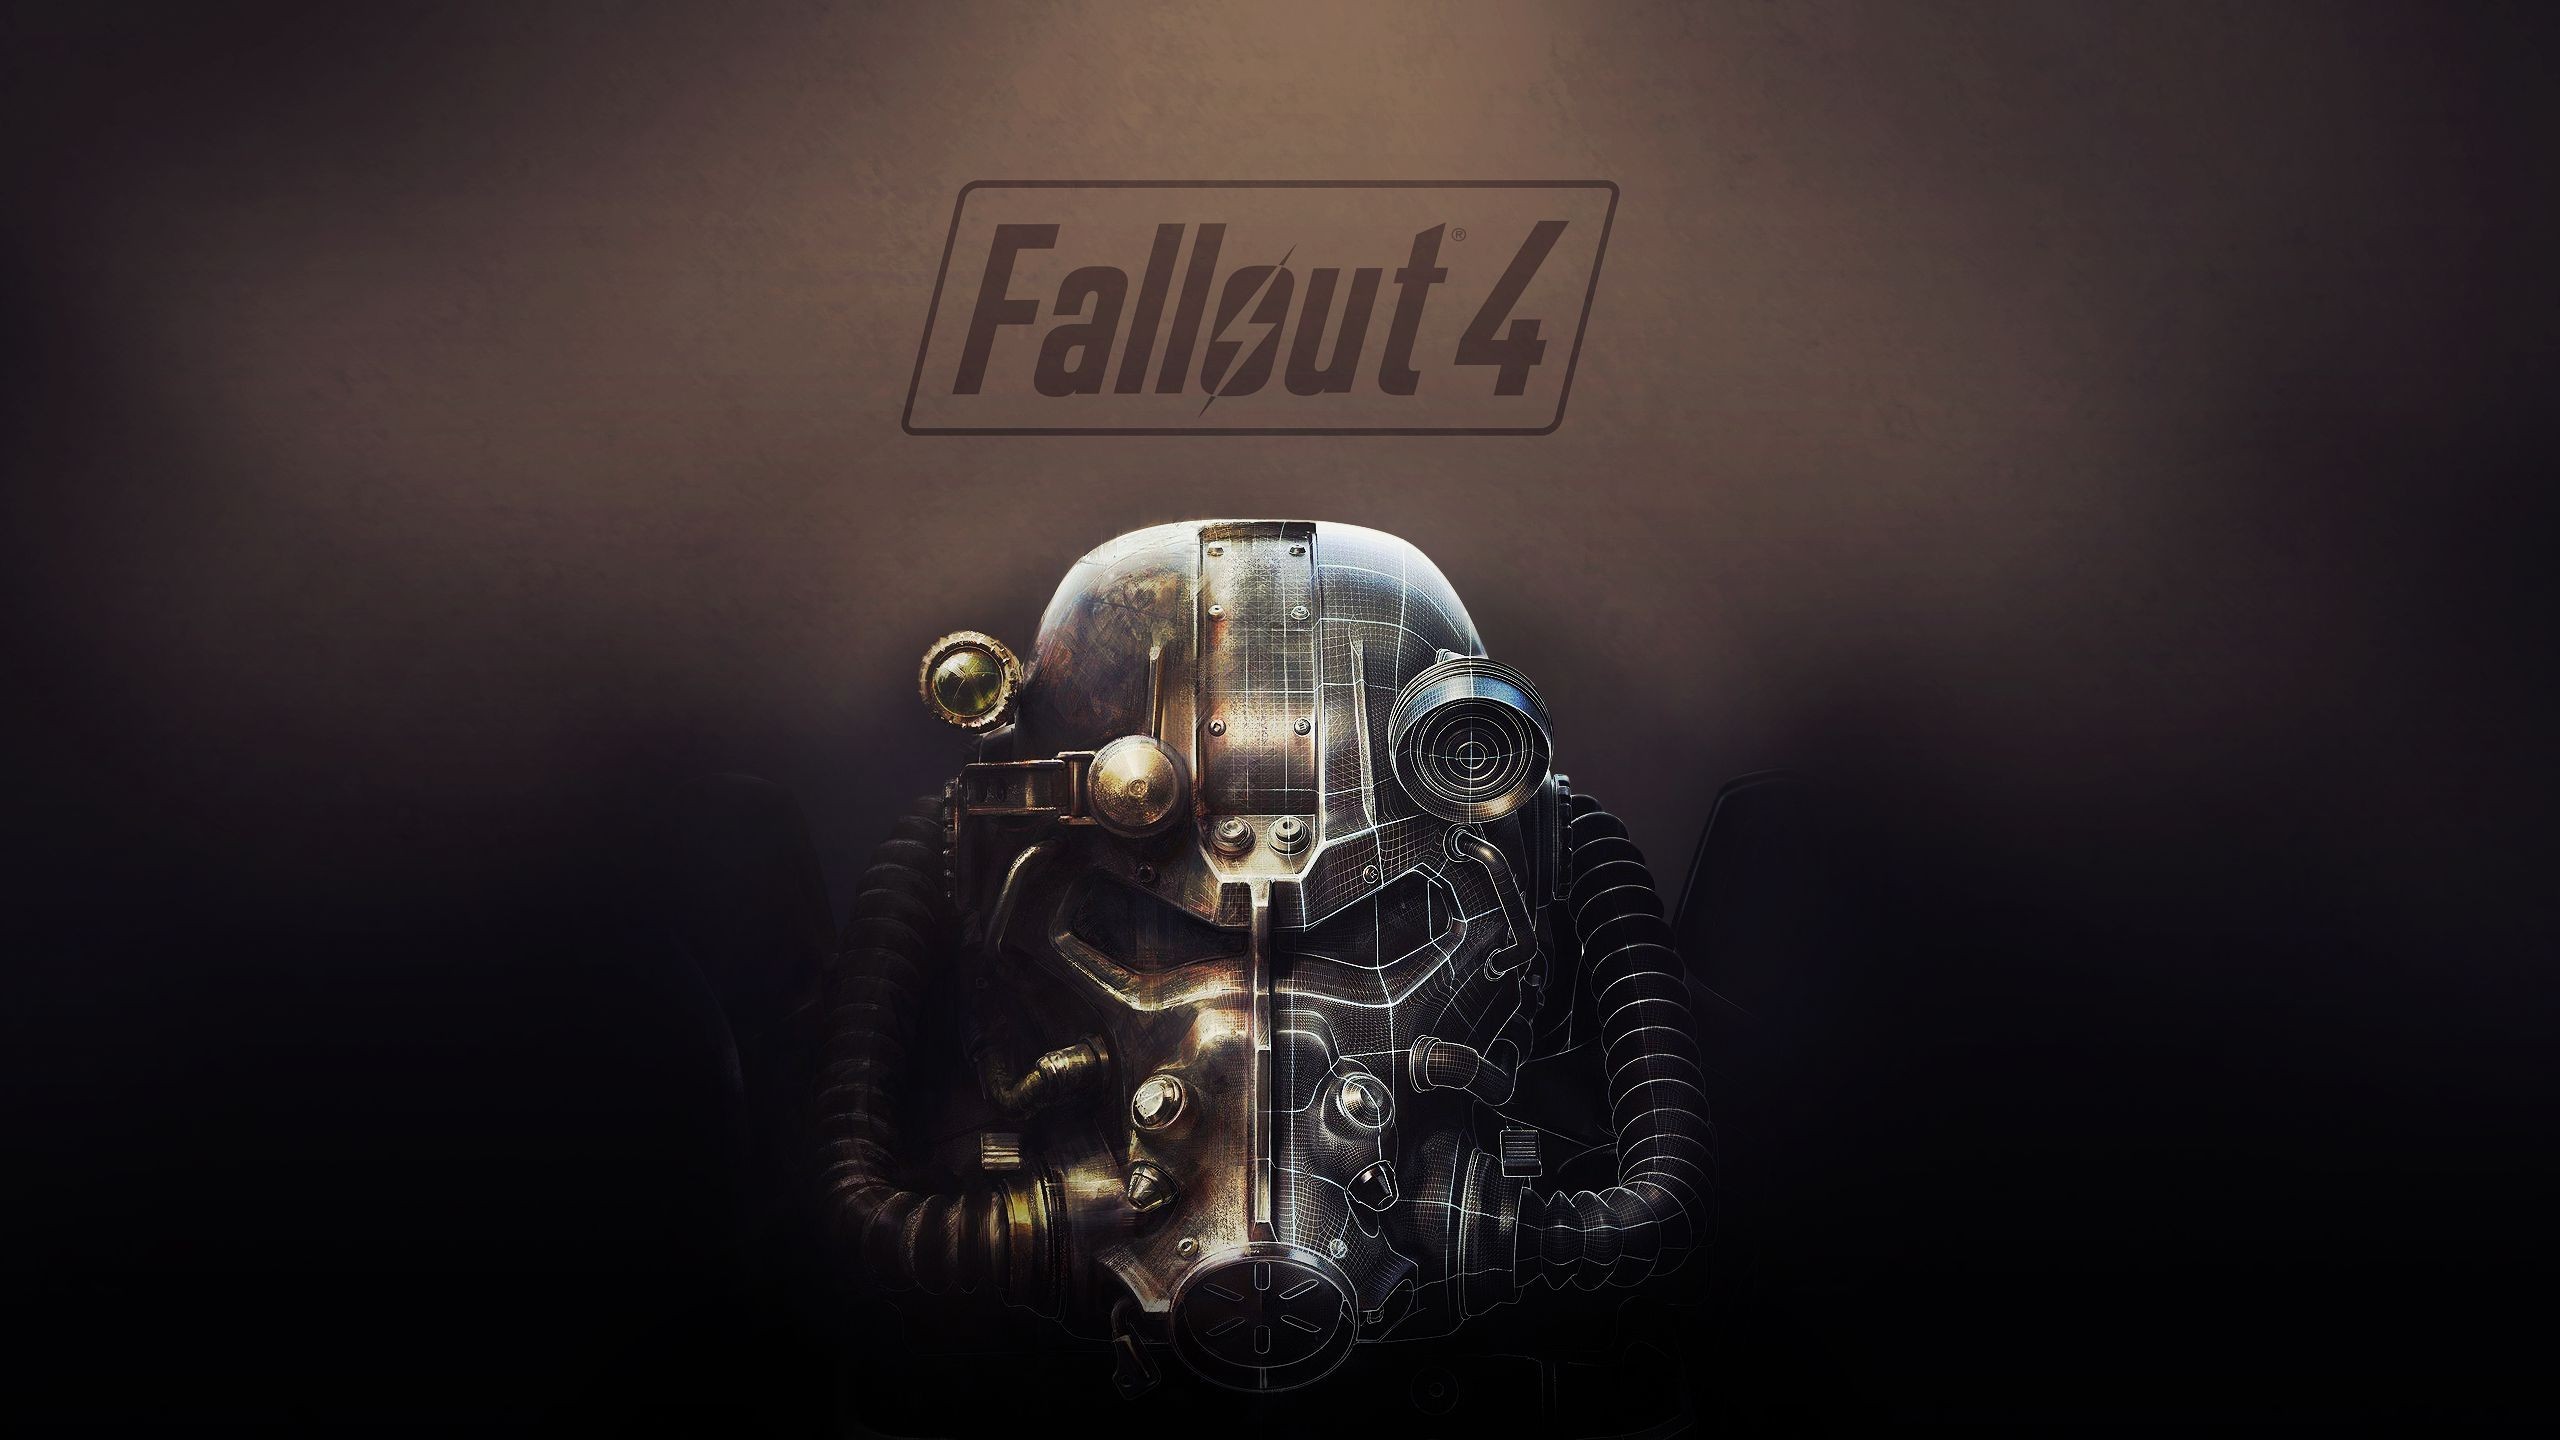 Fallout 4 wallpaper https://mbawallpaperscom.ipage.com/gaming .